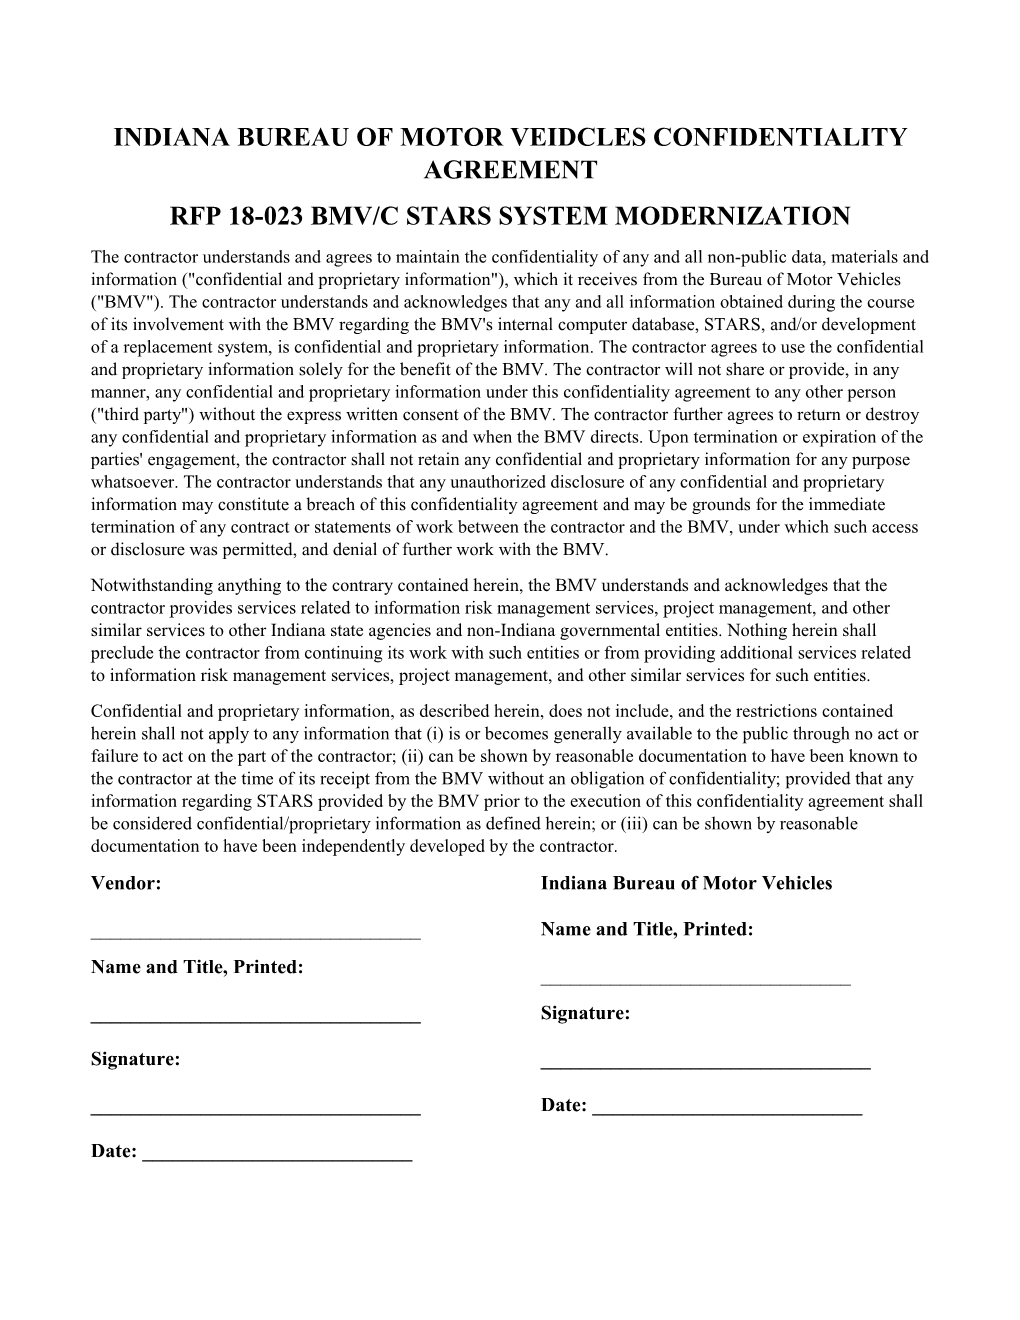 Indiana Bureau of Motor Veidcles Confidentiality Agreement